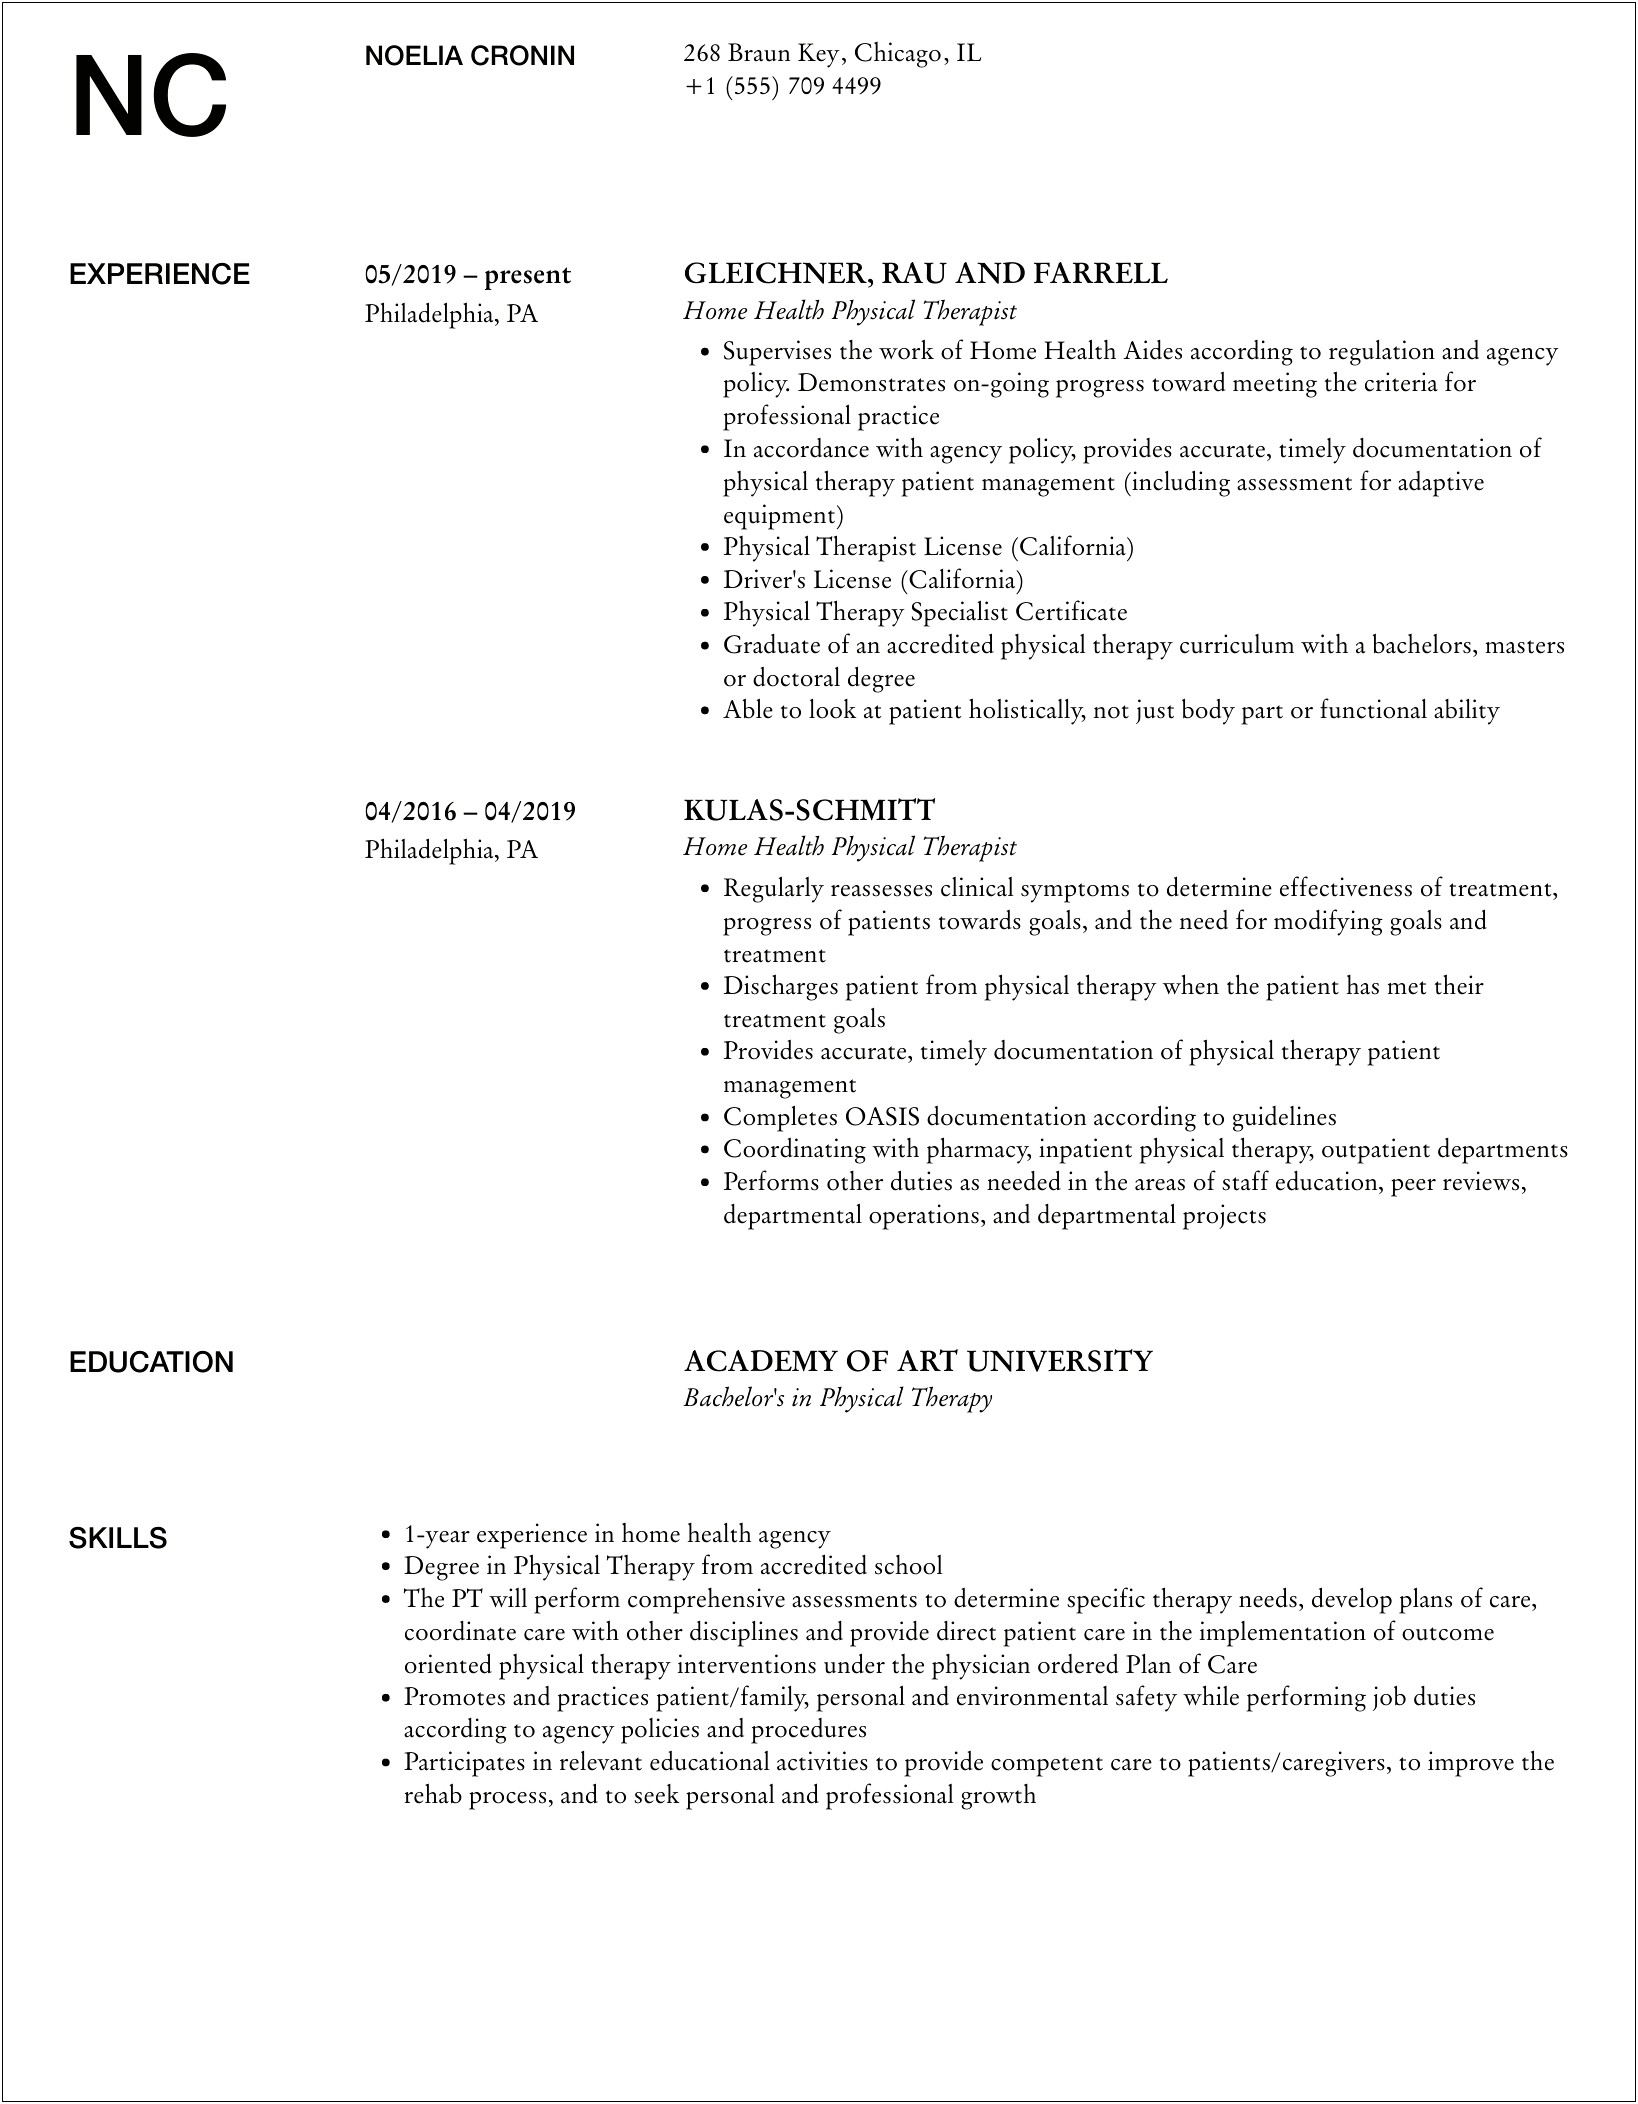 Home Health Resume For Pta Job Description